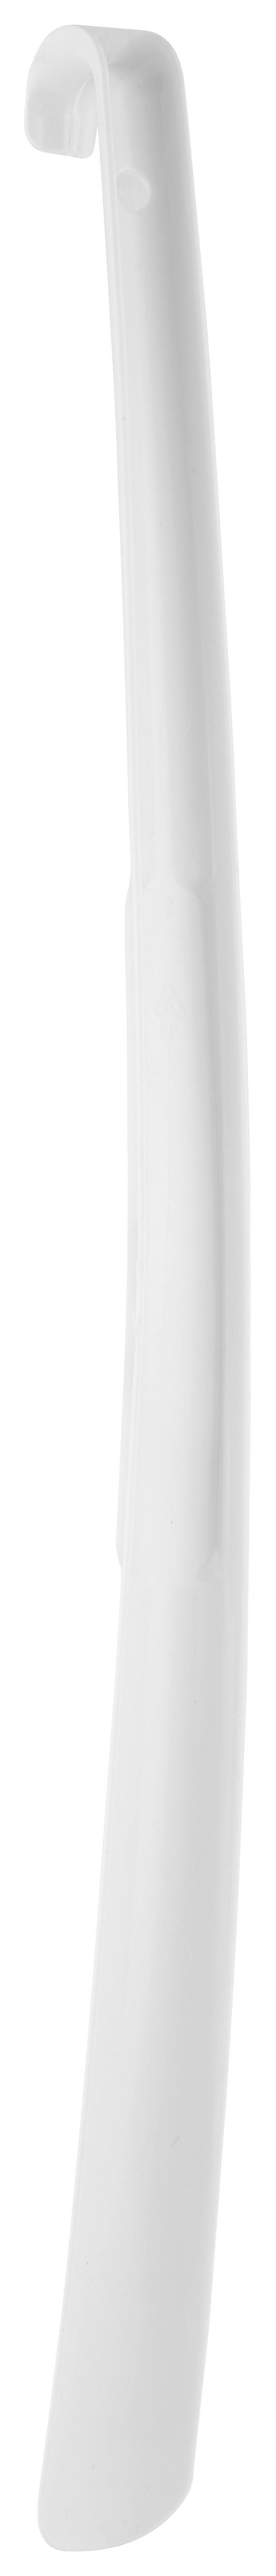 Žlica Za Čevlje Steve Xl -Ext- -Kma- - bela/antracit, umetna masa (4,3/64cm) - Modern Living